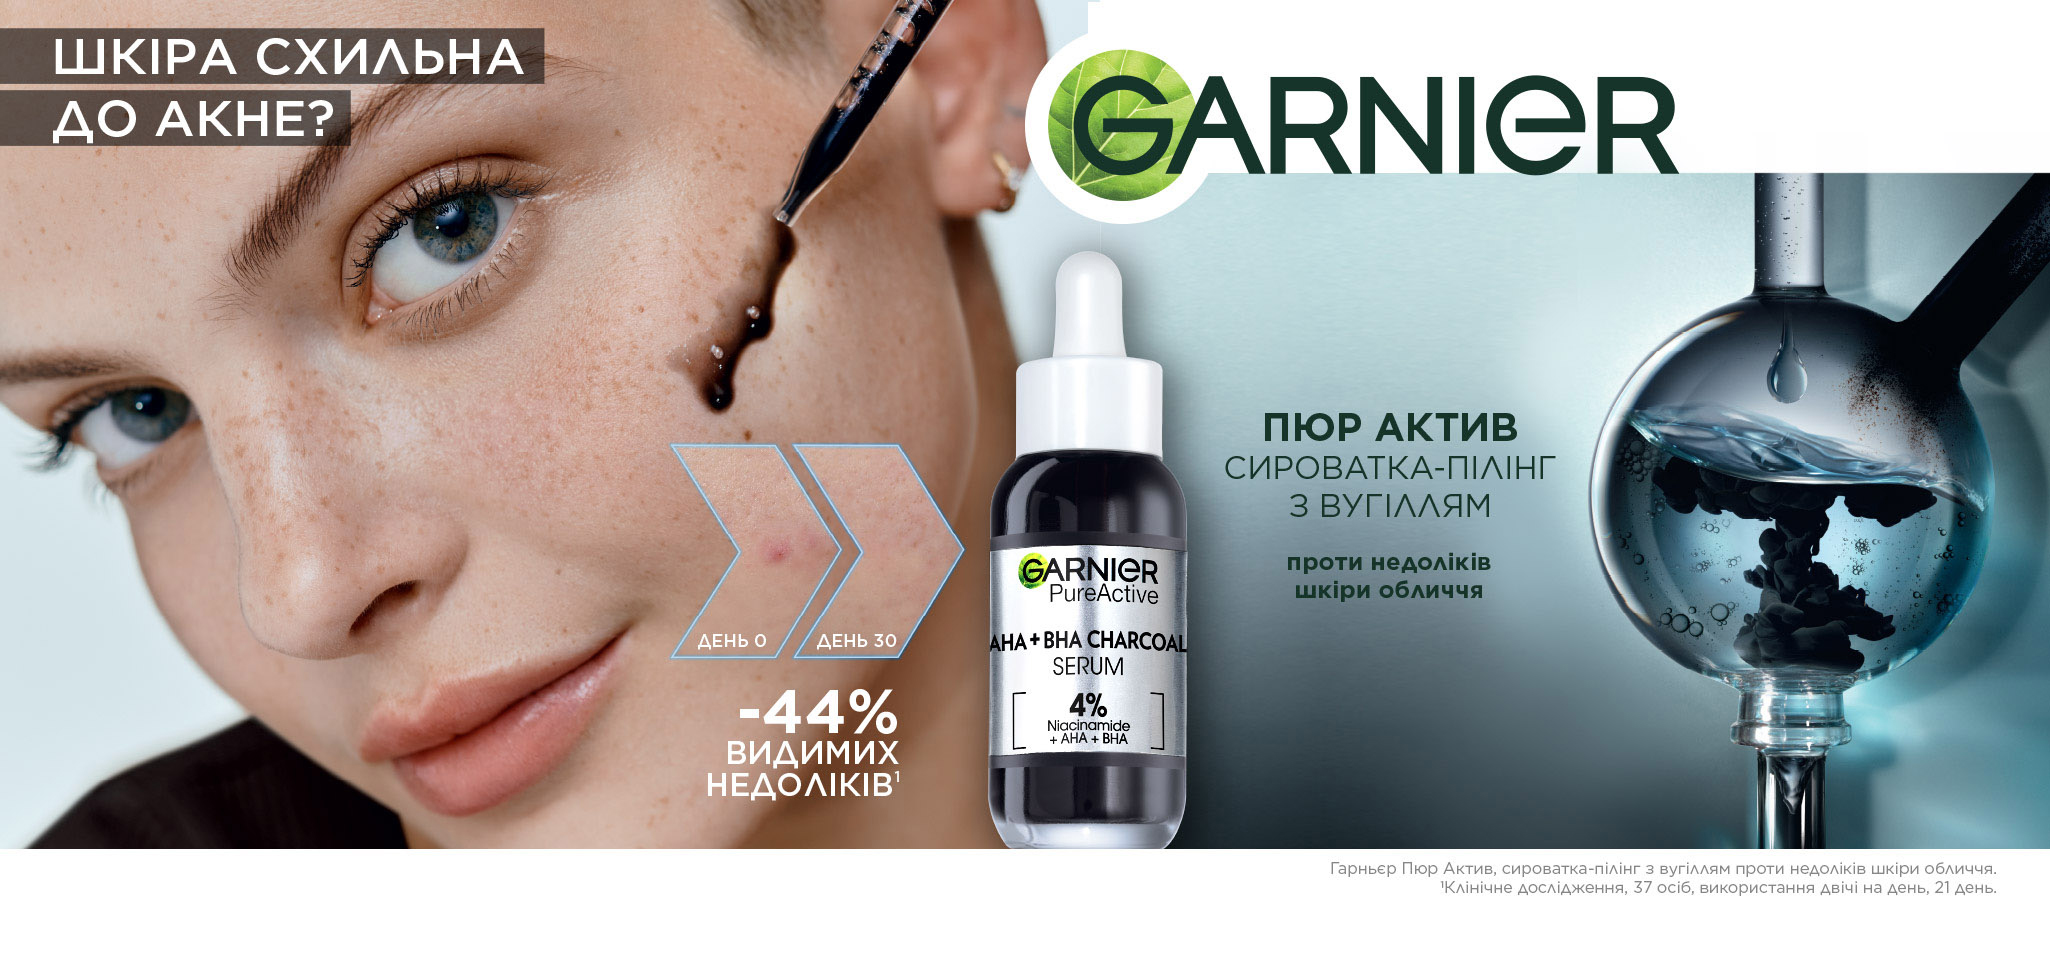 Garnier Pure Active AHA+BHA Charcoal Serum